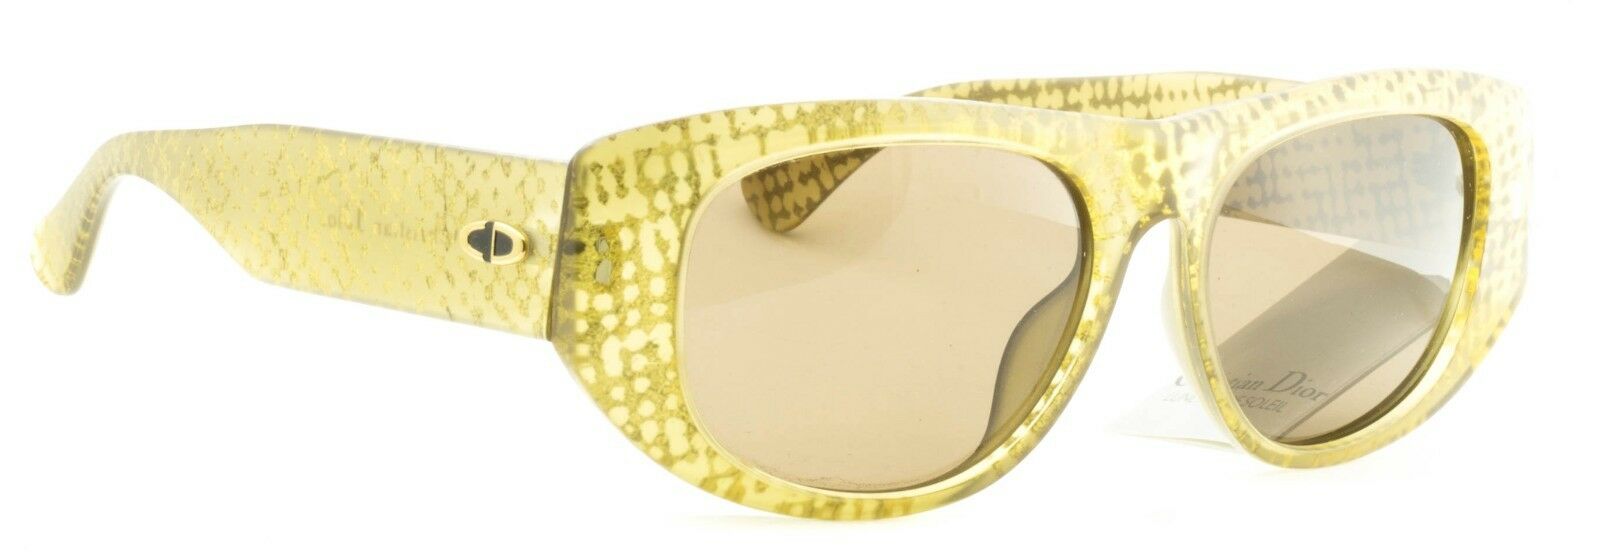 CHRISTIAN DIOR 2556 60 Vintage Sunglasses Shades BNIB Brand New in Case GERMANY